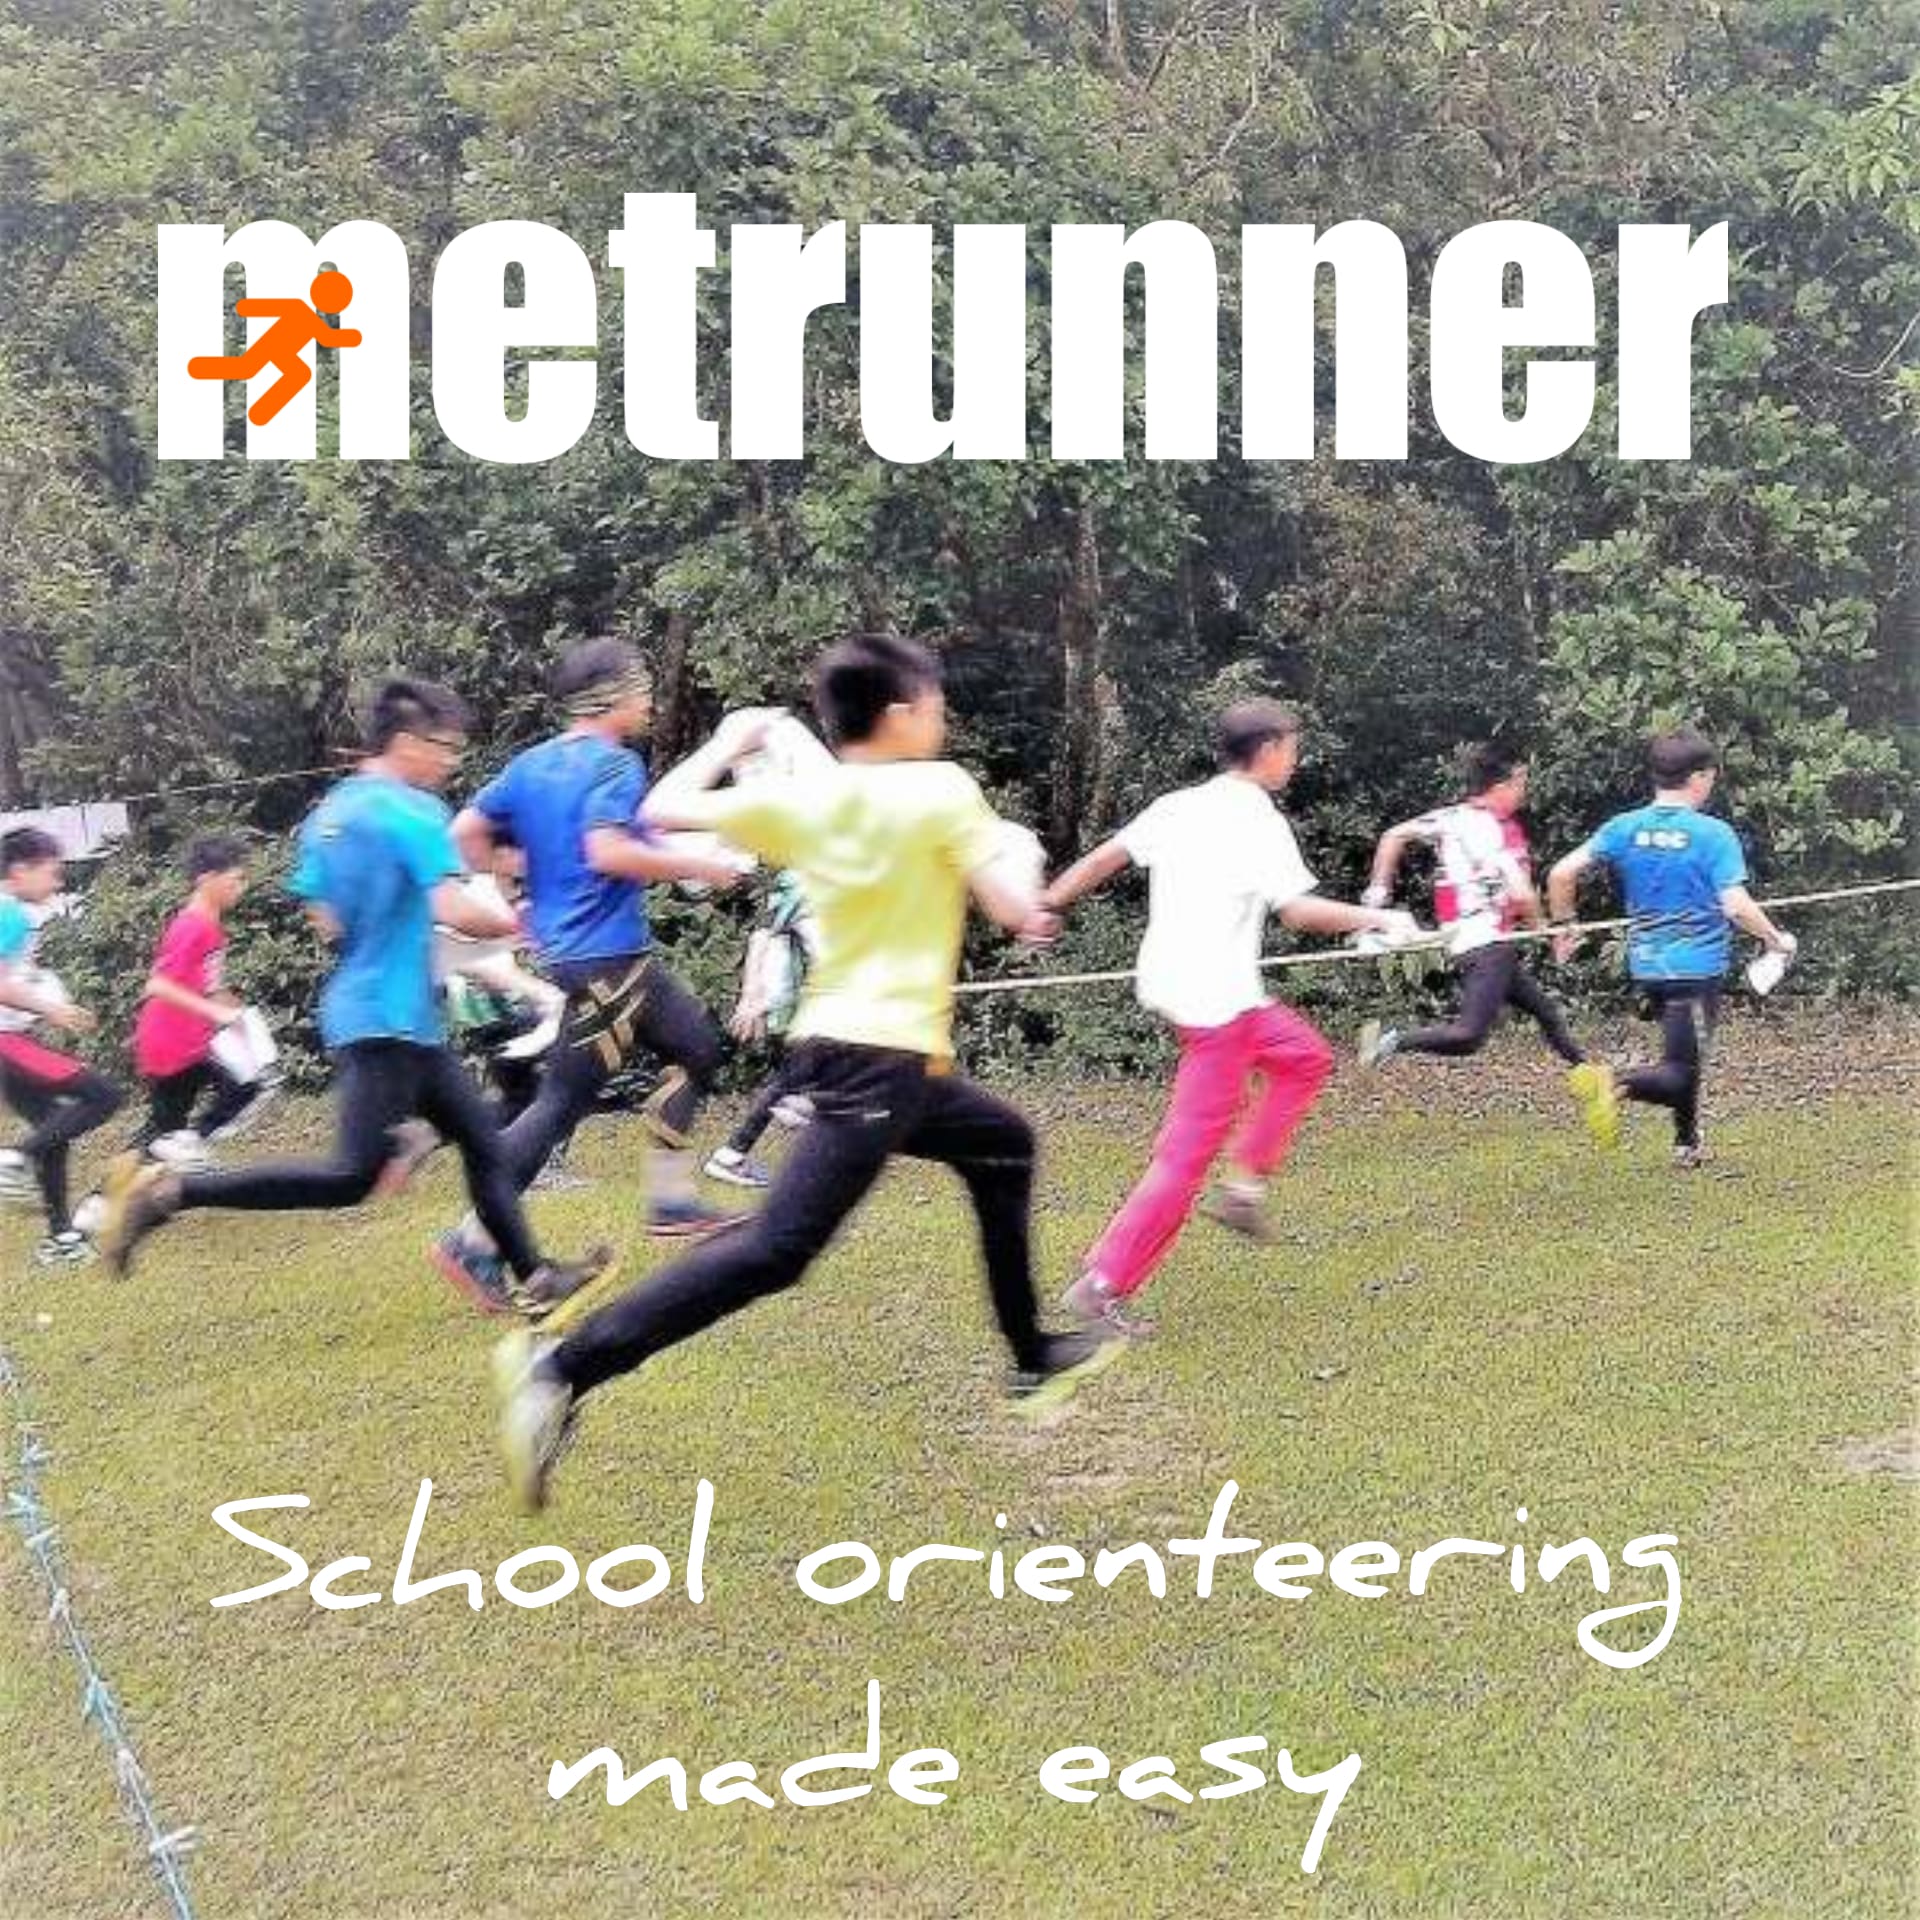 School orienteering made easy with Metrunner